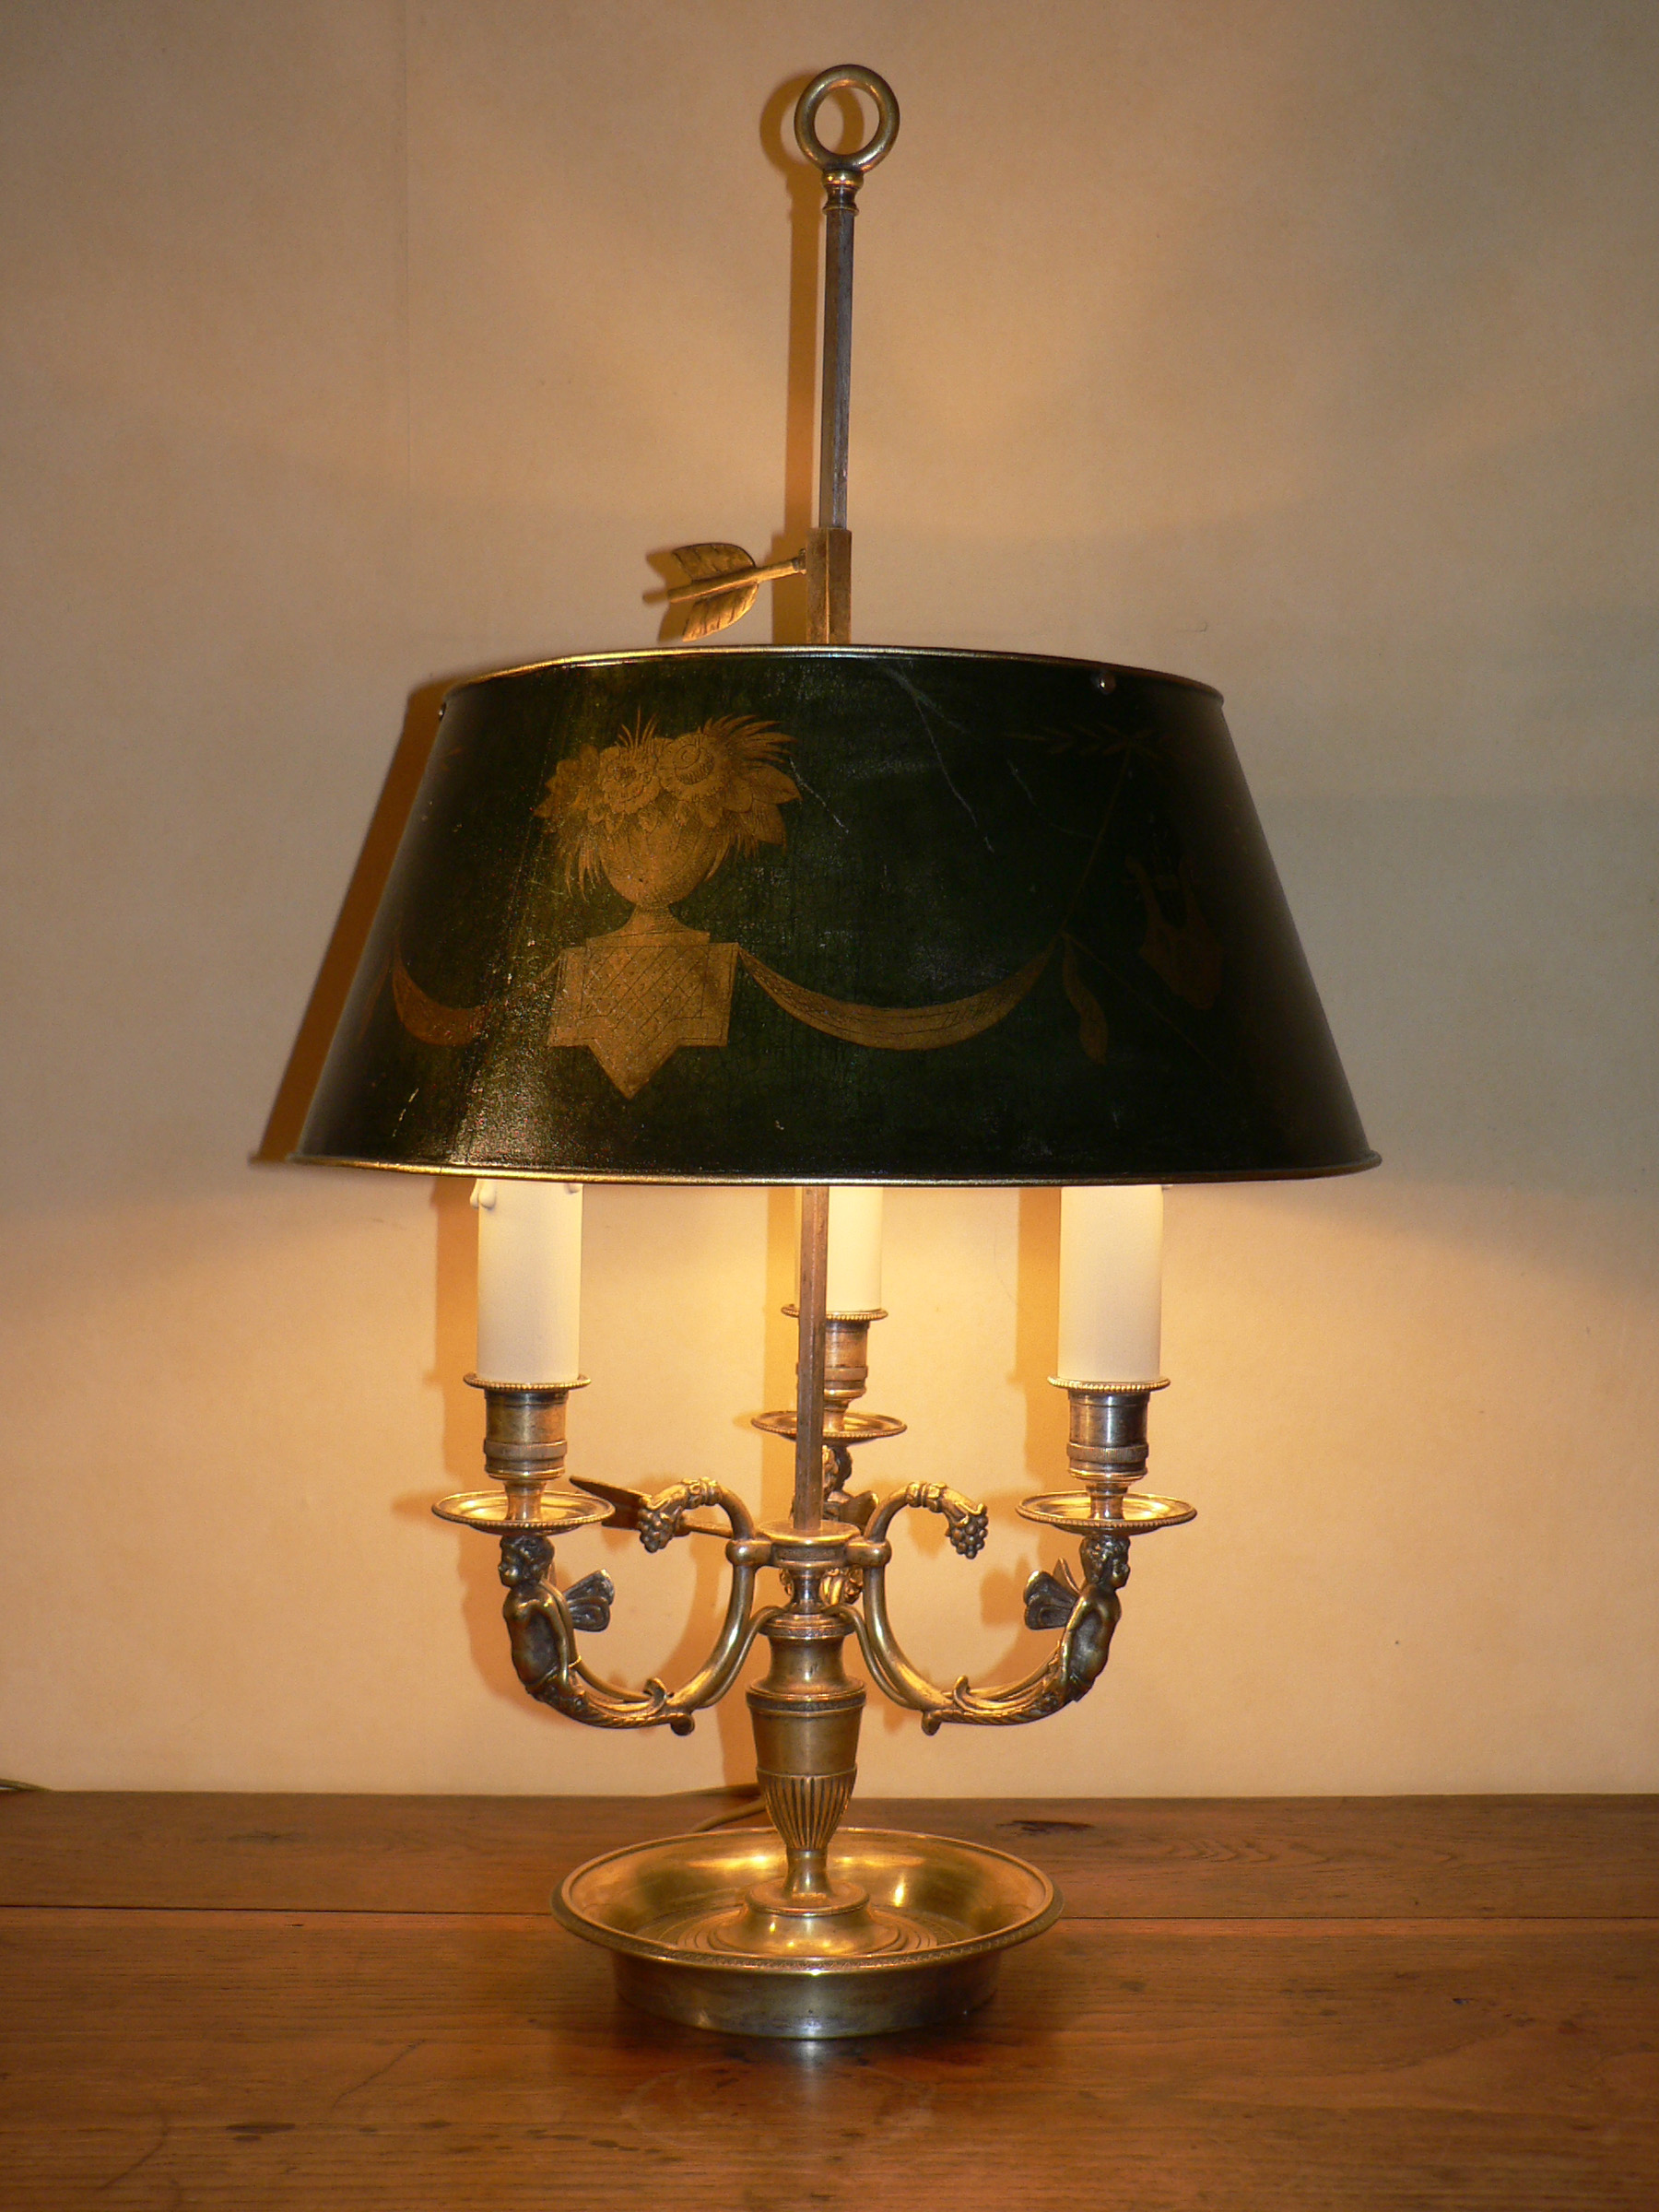 Lampe bouillotte Collection particulière